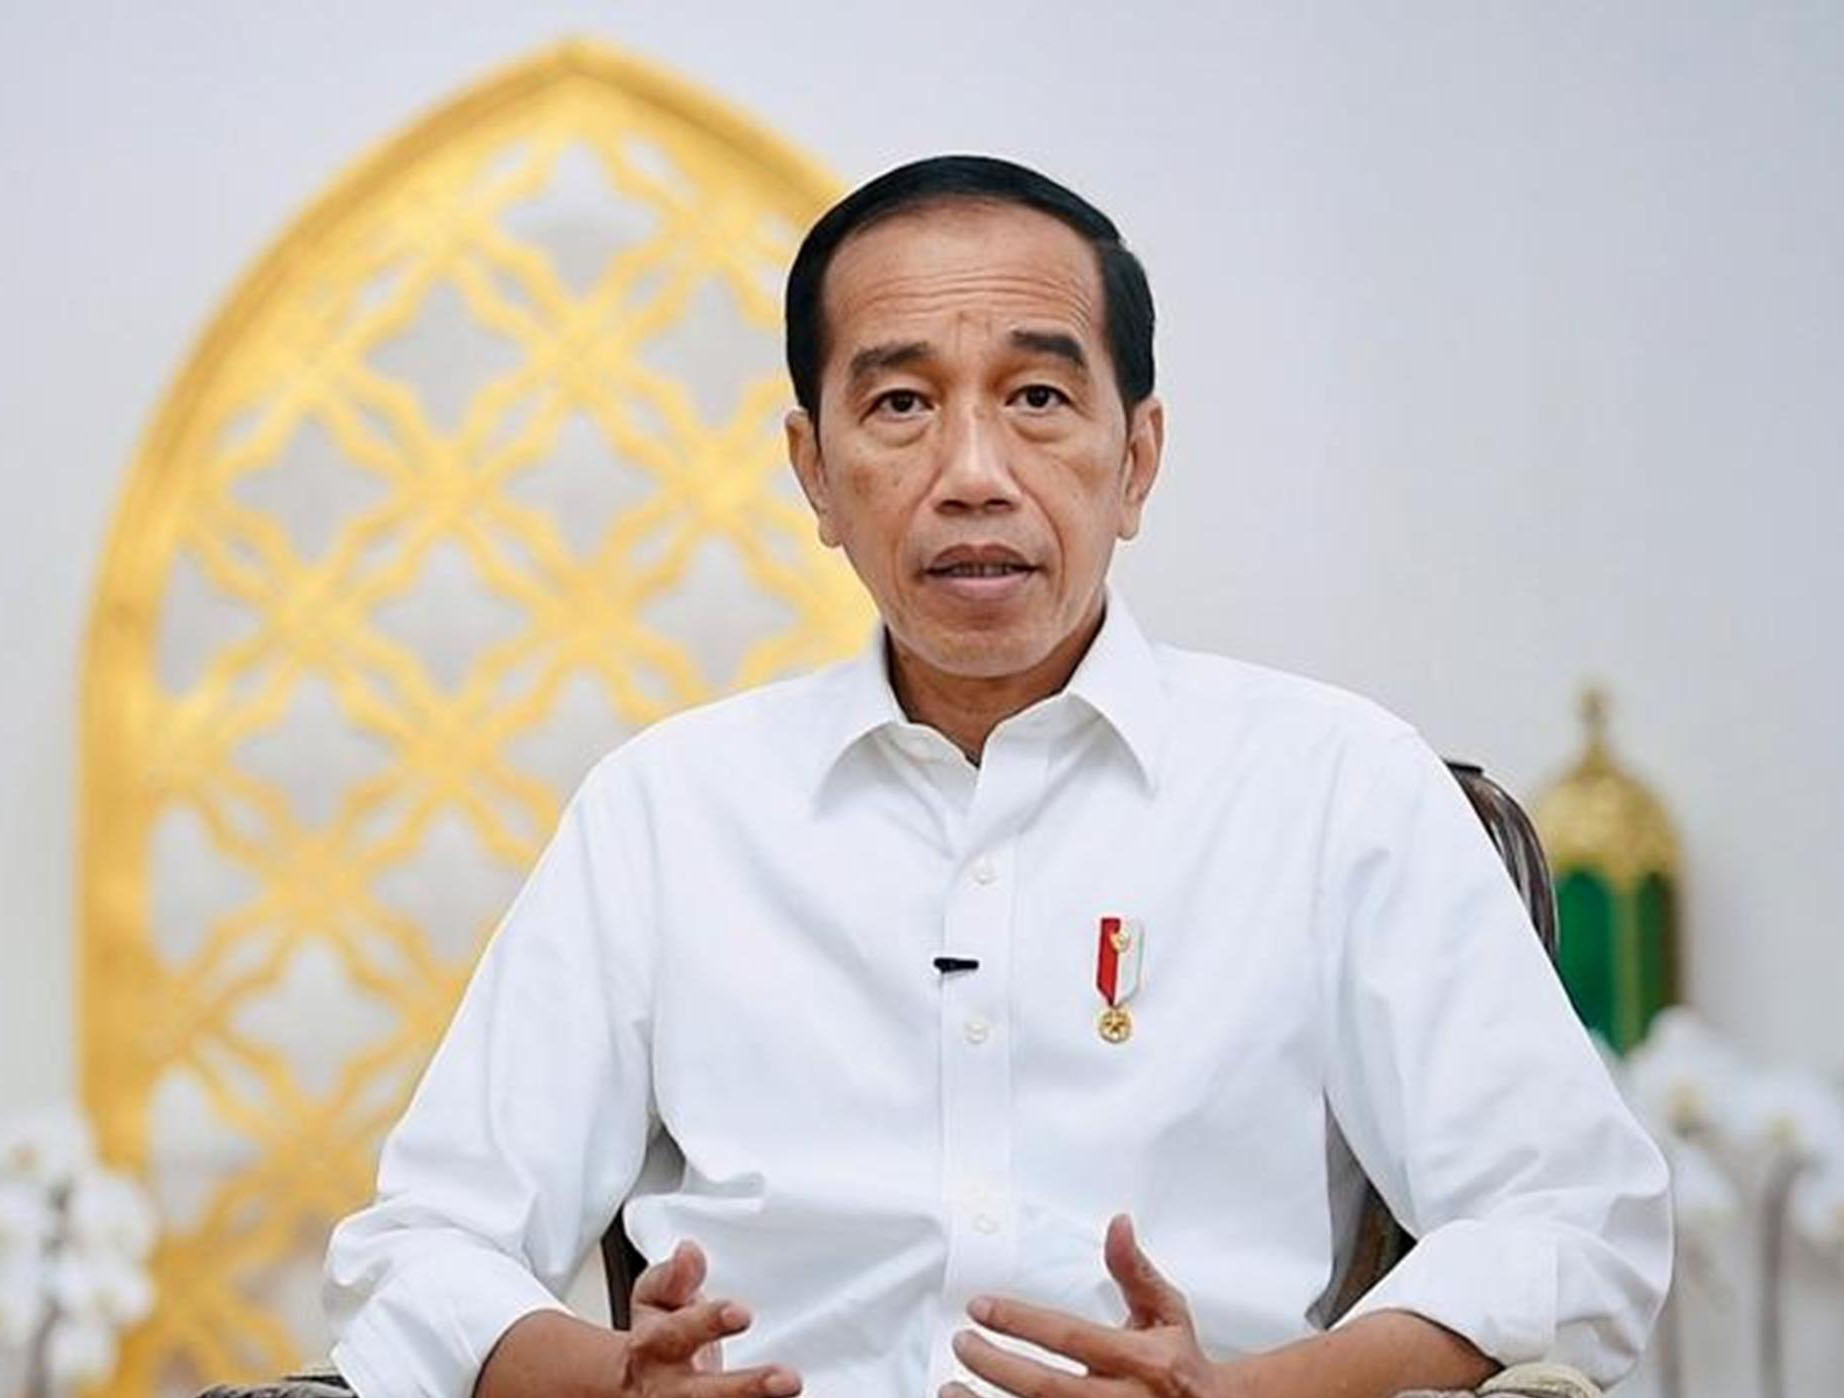  Presiden Jokowi Minta Evaluasi Menyeluruh